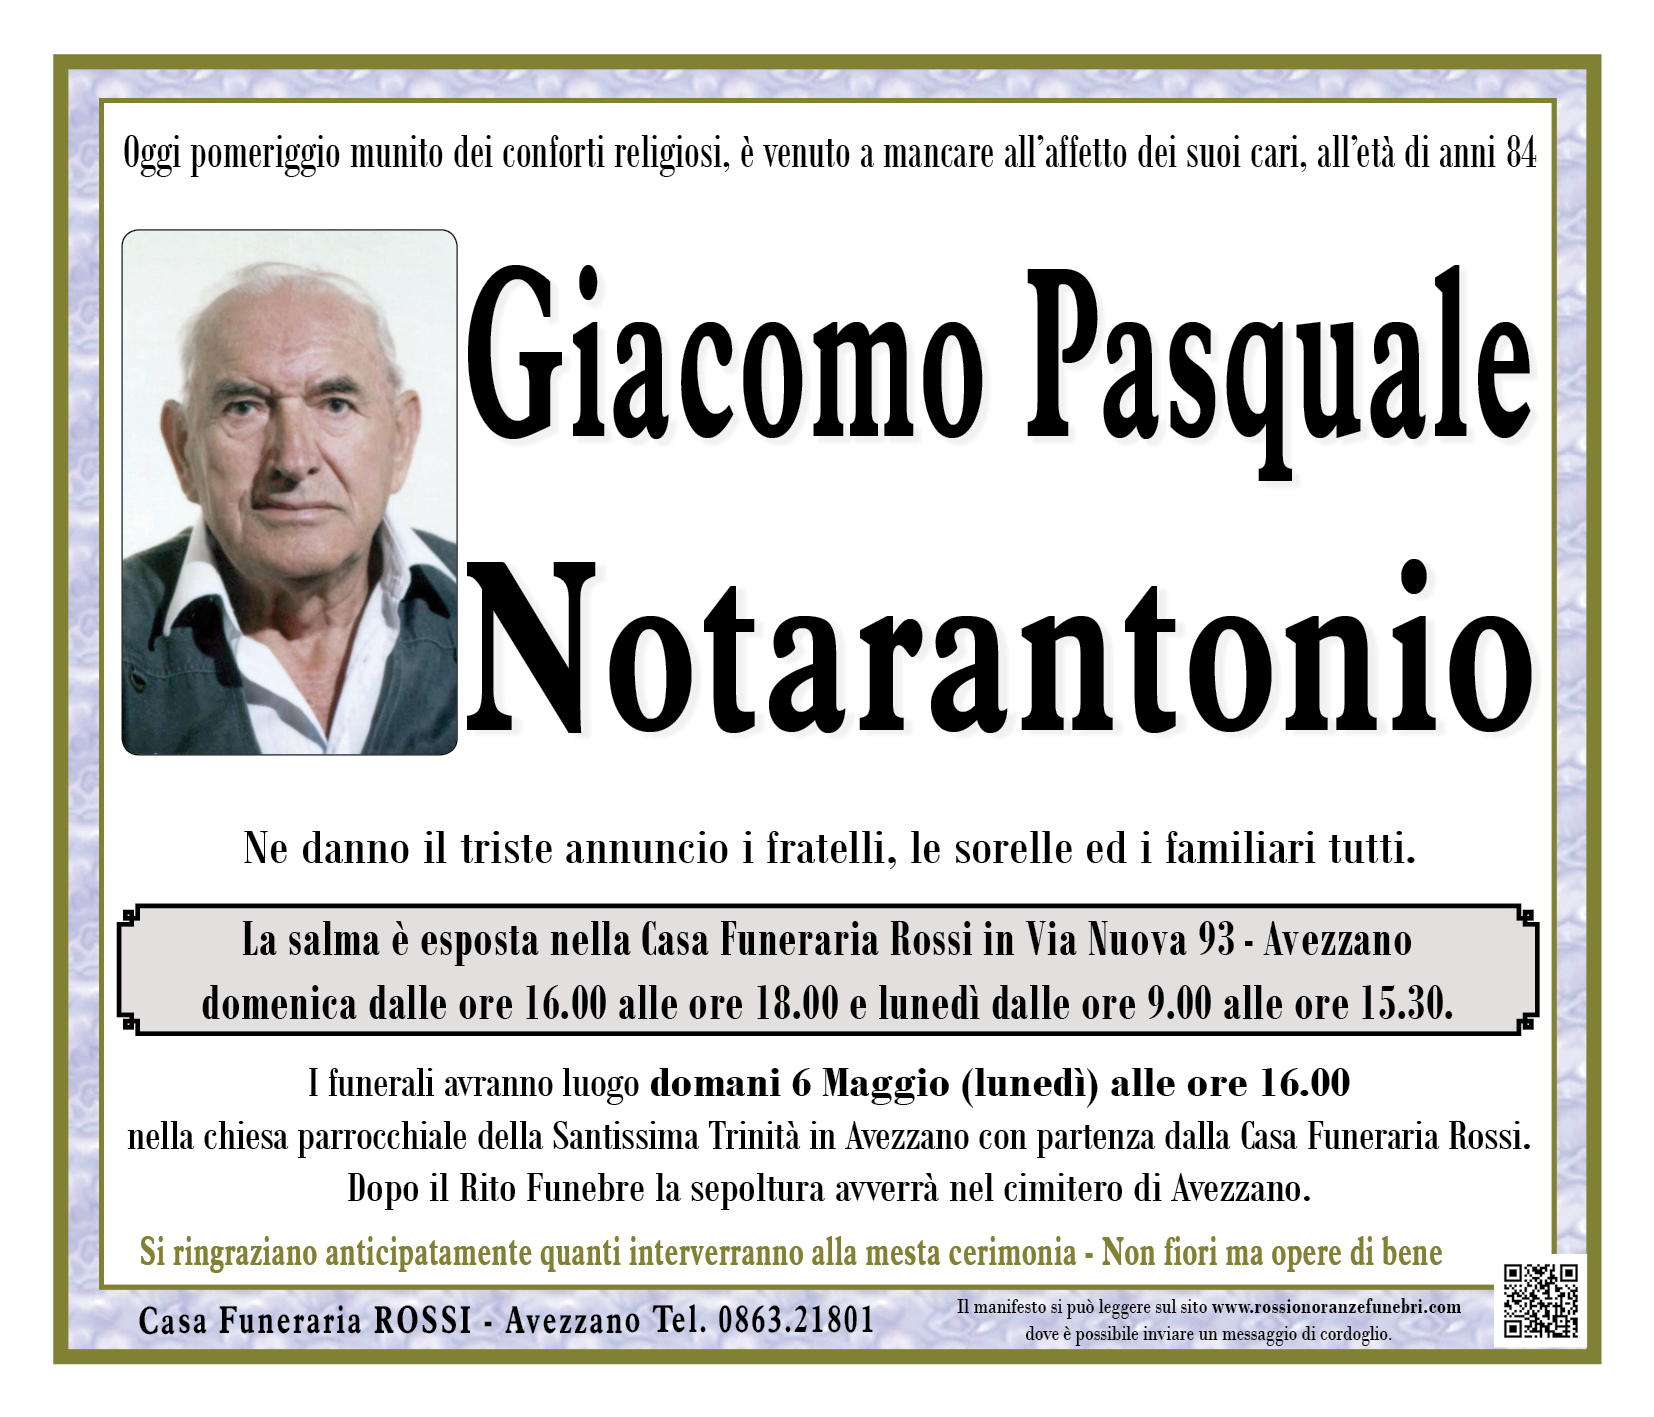 Giacomo Pasquale Notarantonio